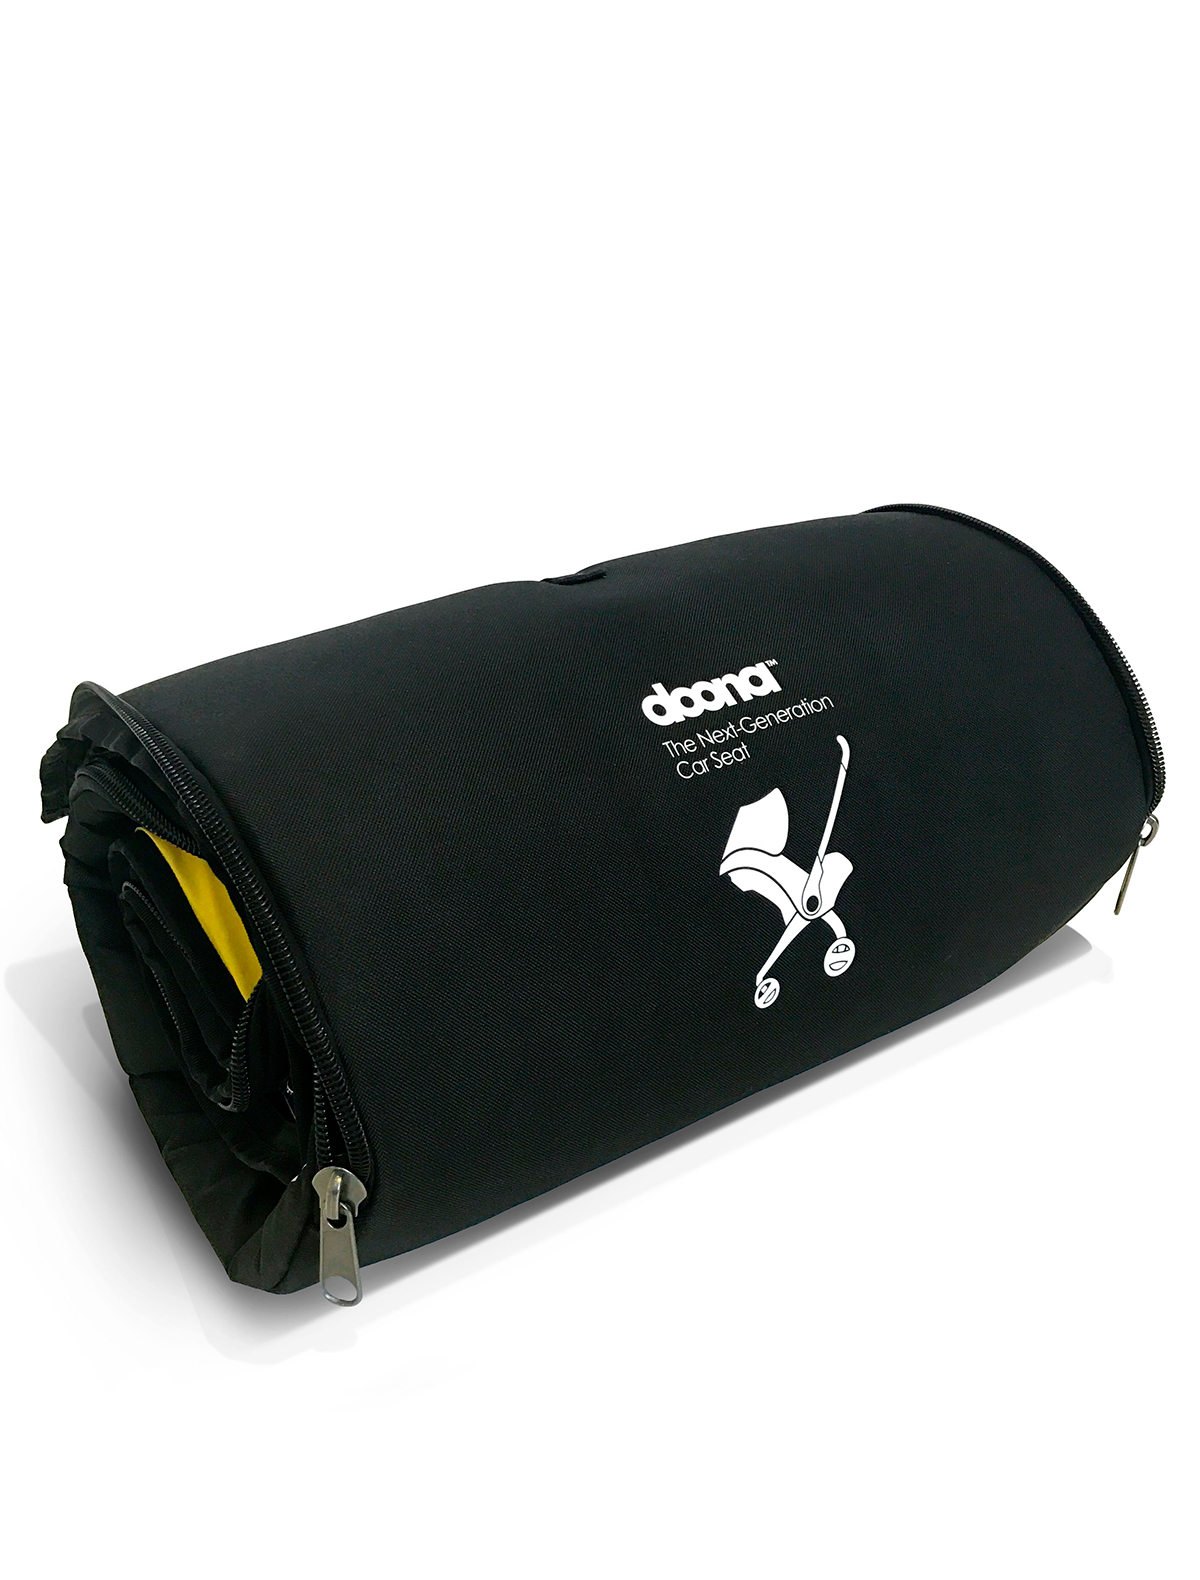 Аксессуар для коляски Doona защита от солнца с москитной сеткой для коляски автокресла doona дуна